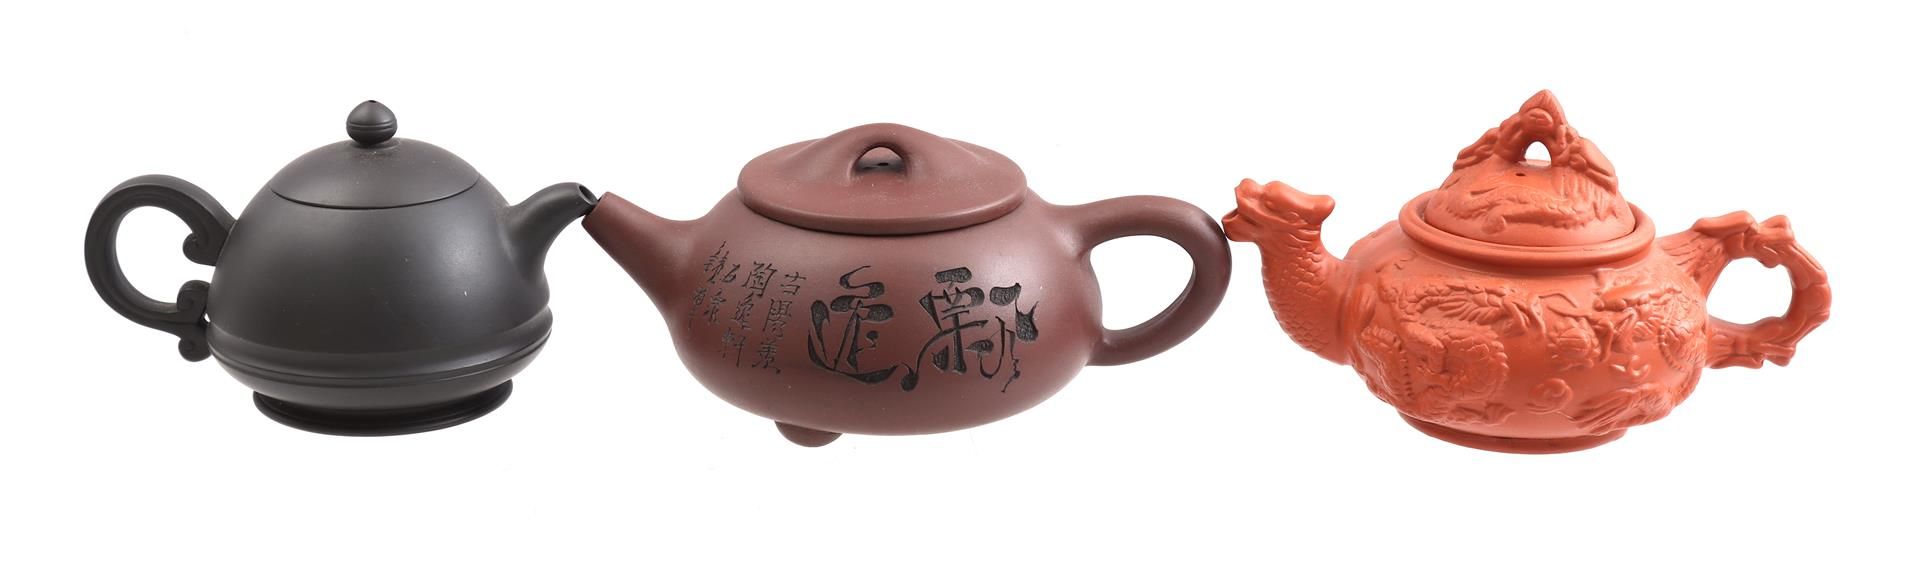 3 Yixing earthenware teapots, China 21th - Image 2 of 3